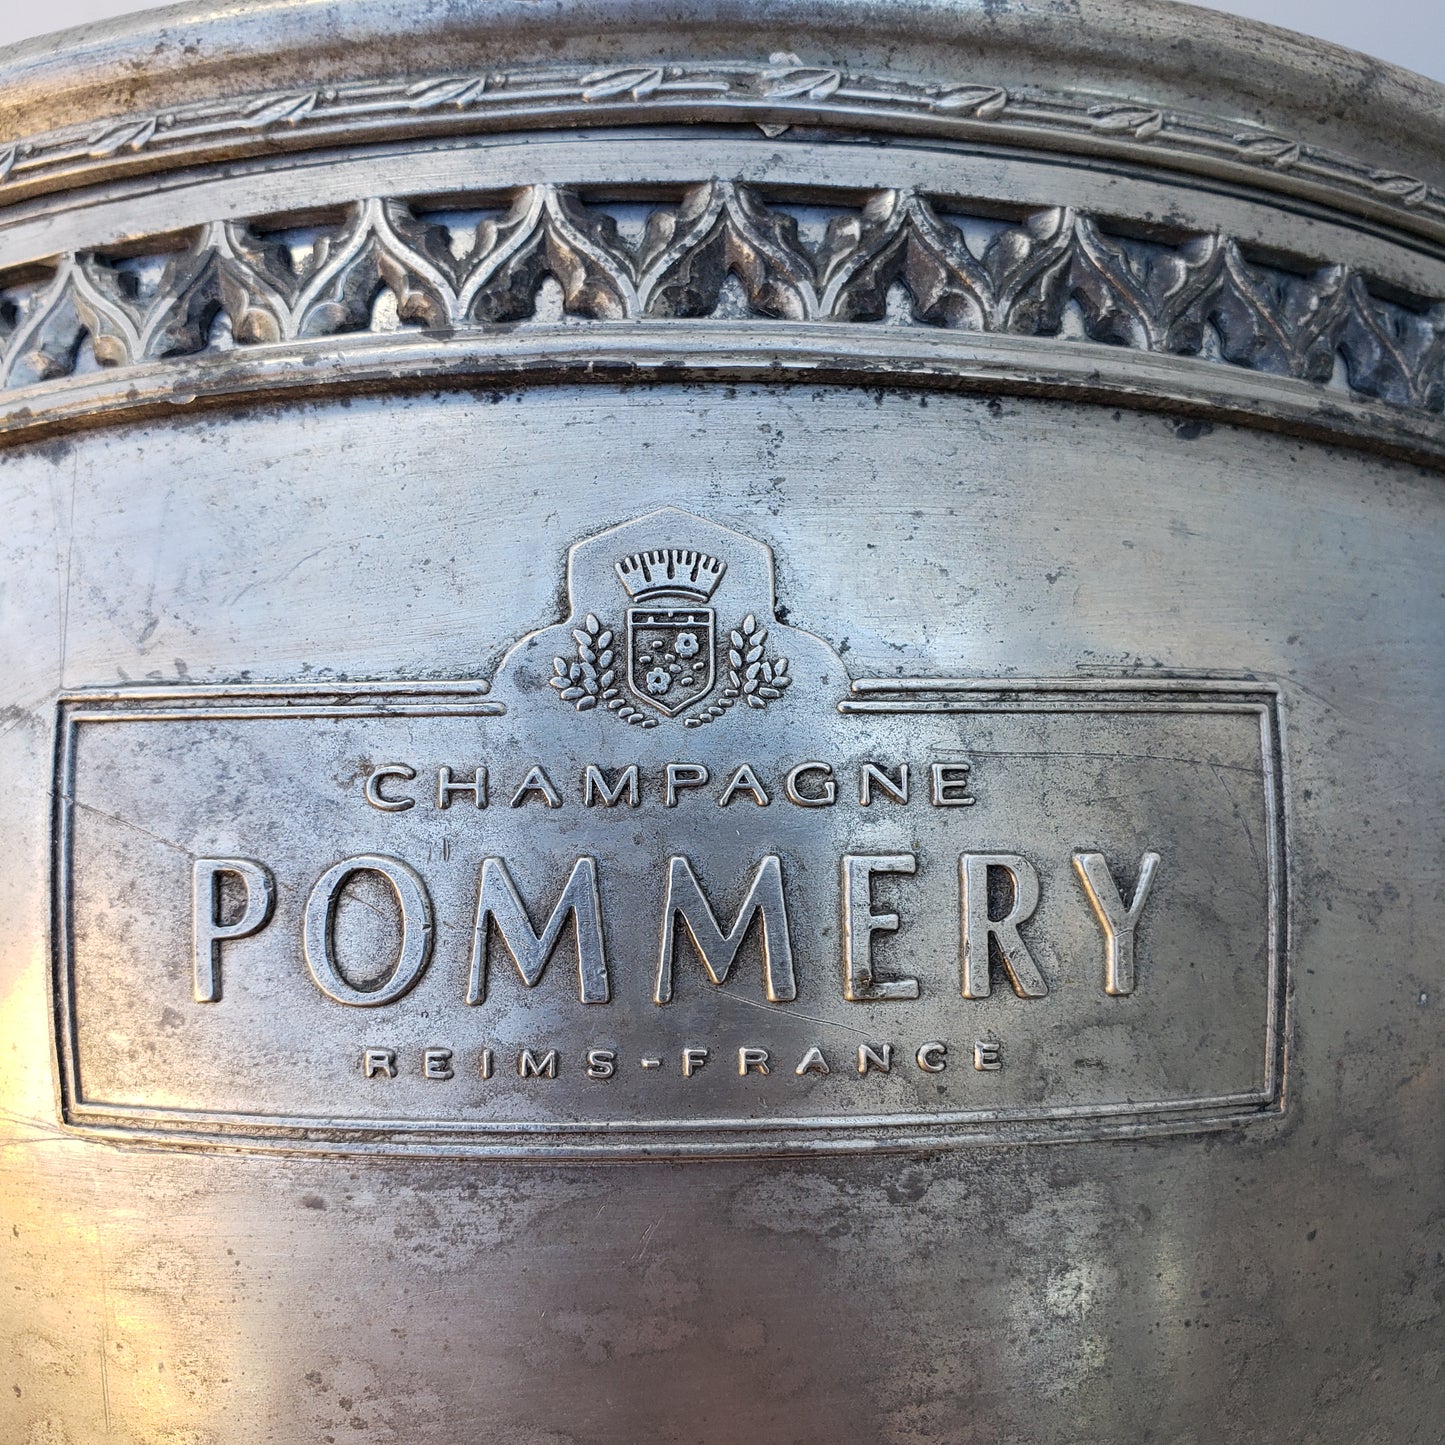 Pommery Champagne Bowl / Bucket